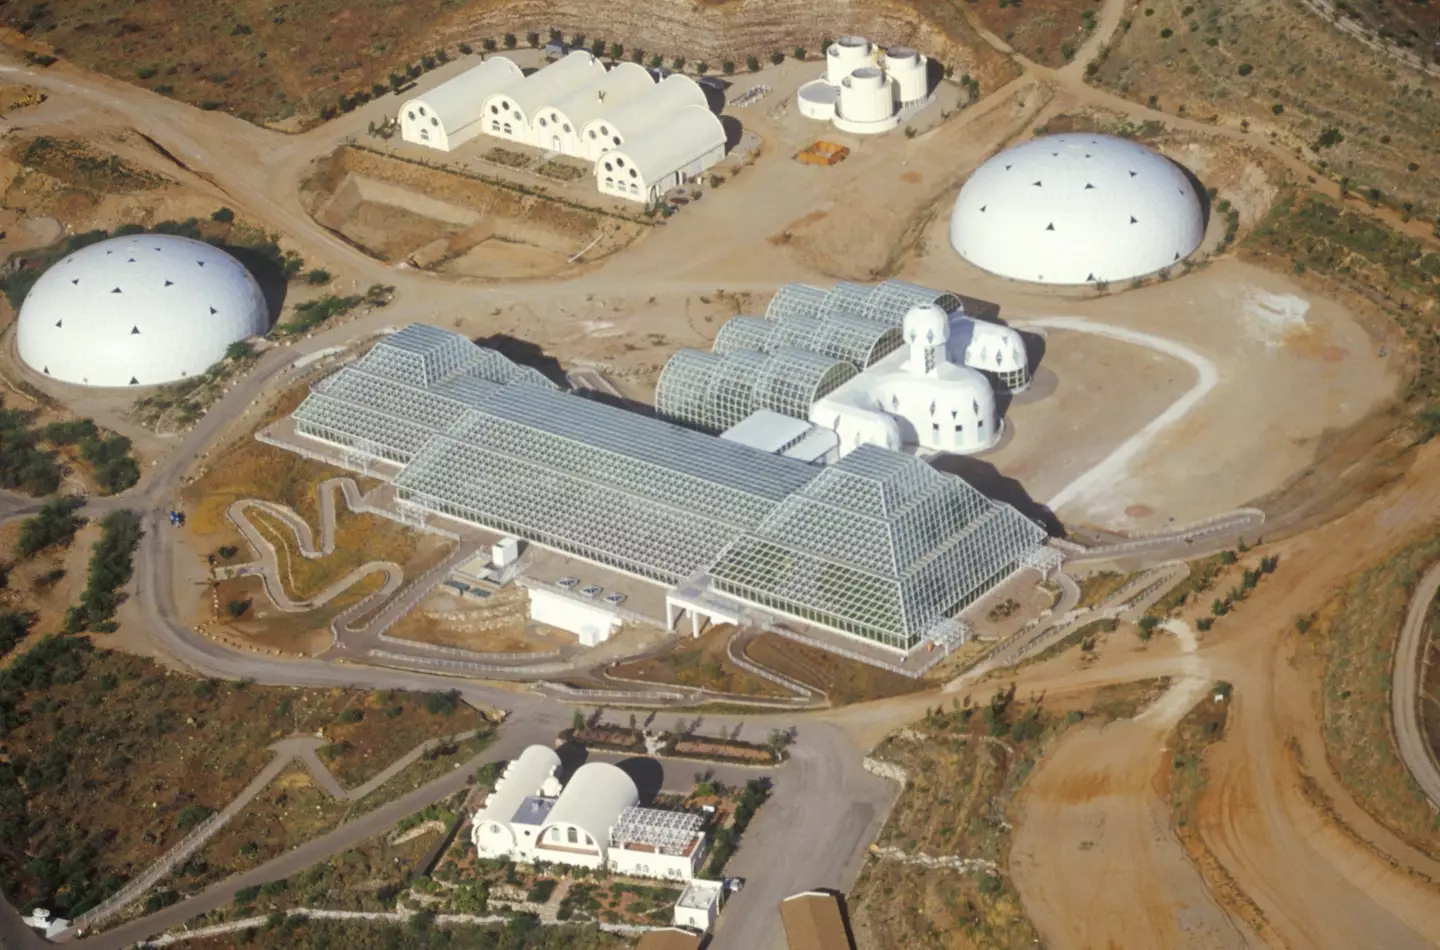 Biosphere 2 is located in Arizona, US.